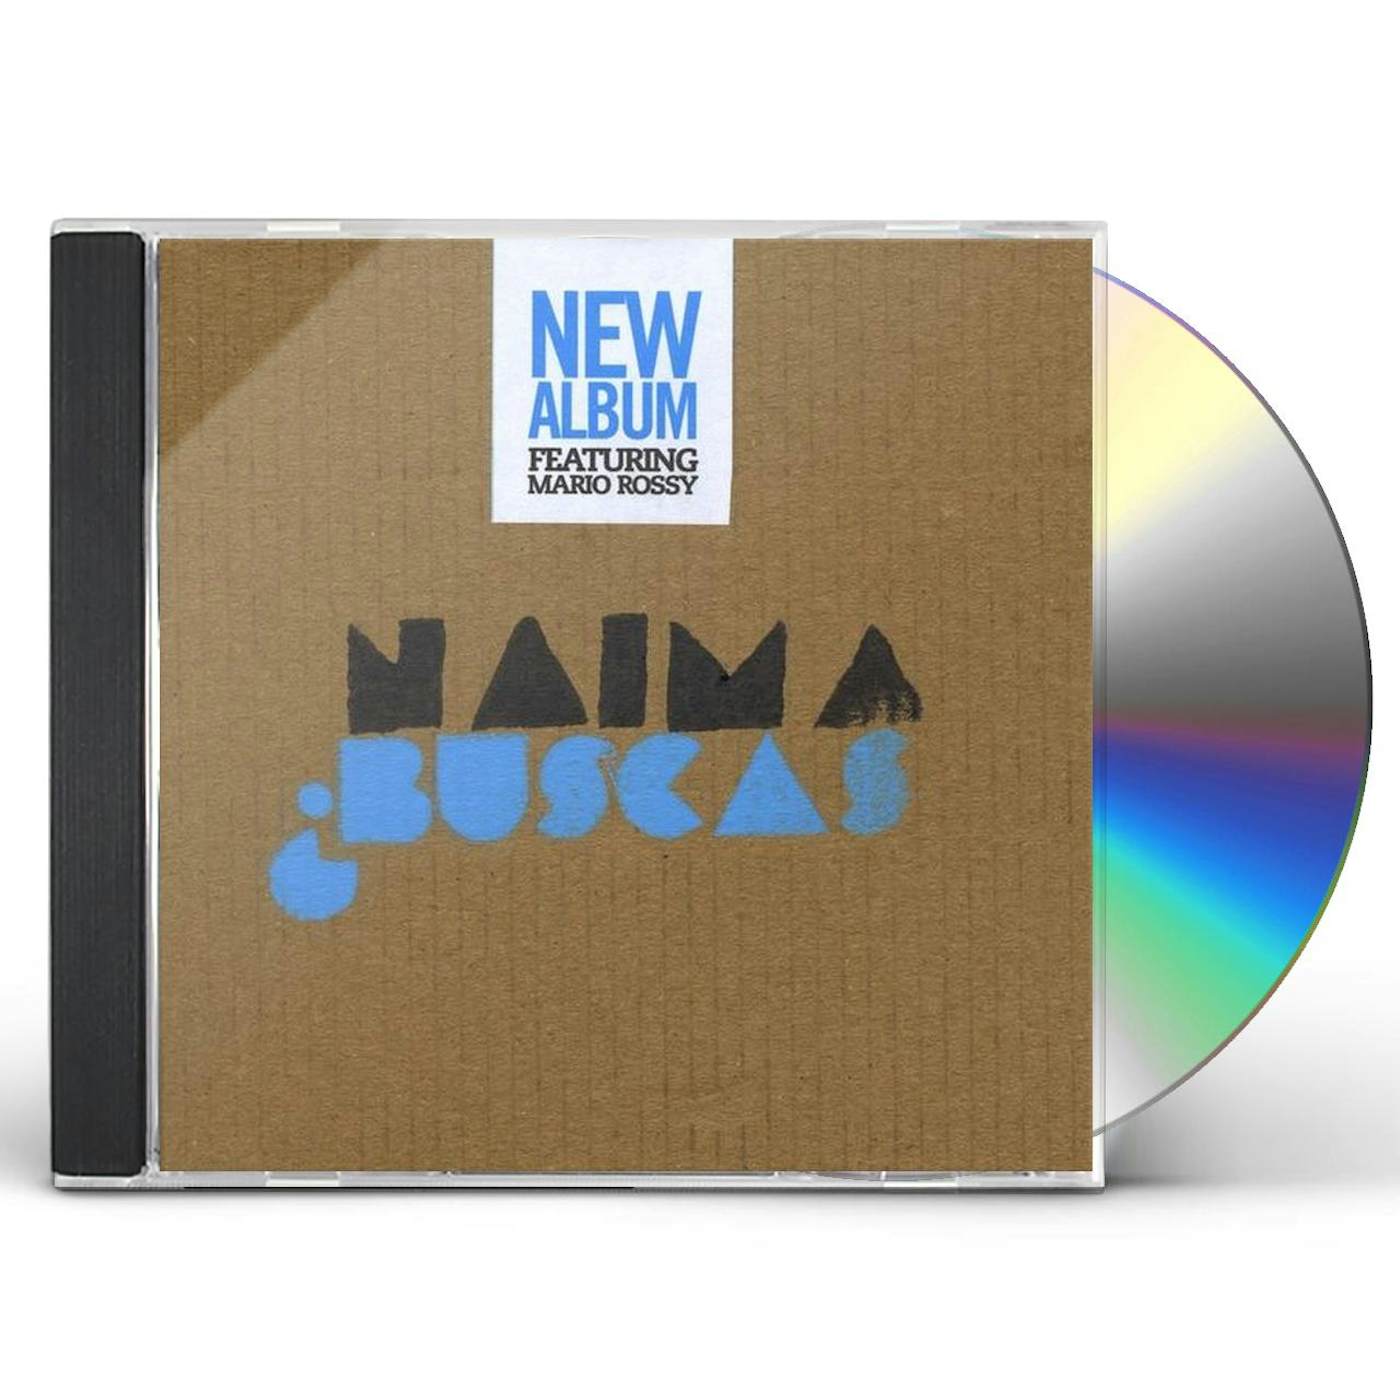 Naima BUSCAS CD